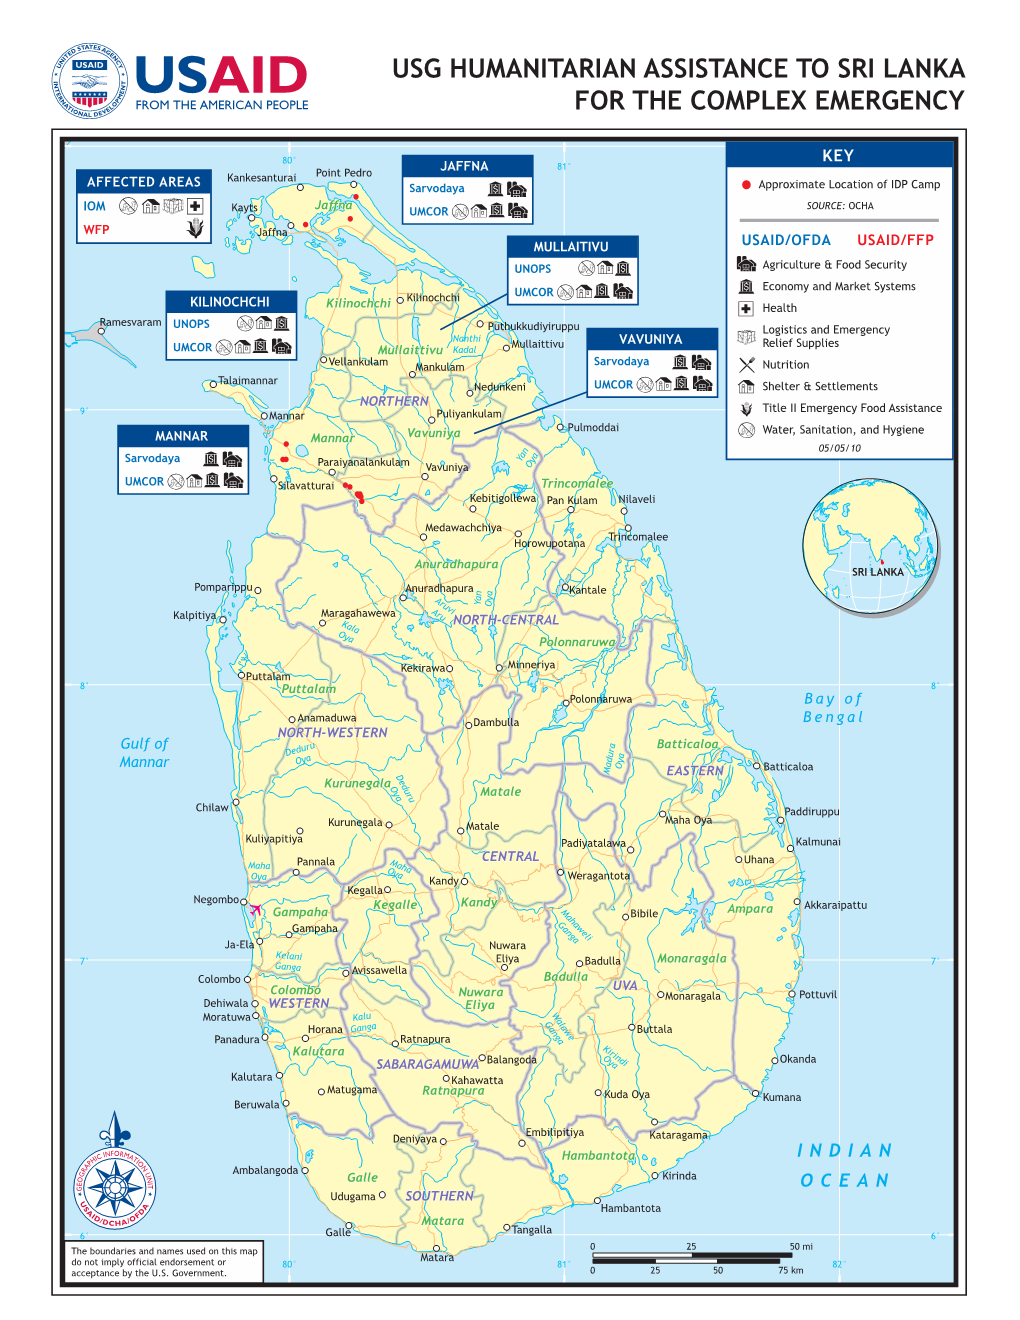 USAID/OFDA Sri Lanka Program Map 5/5/2010